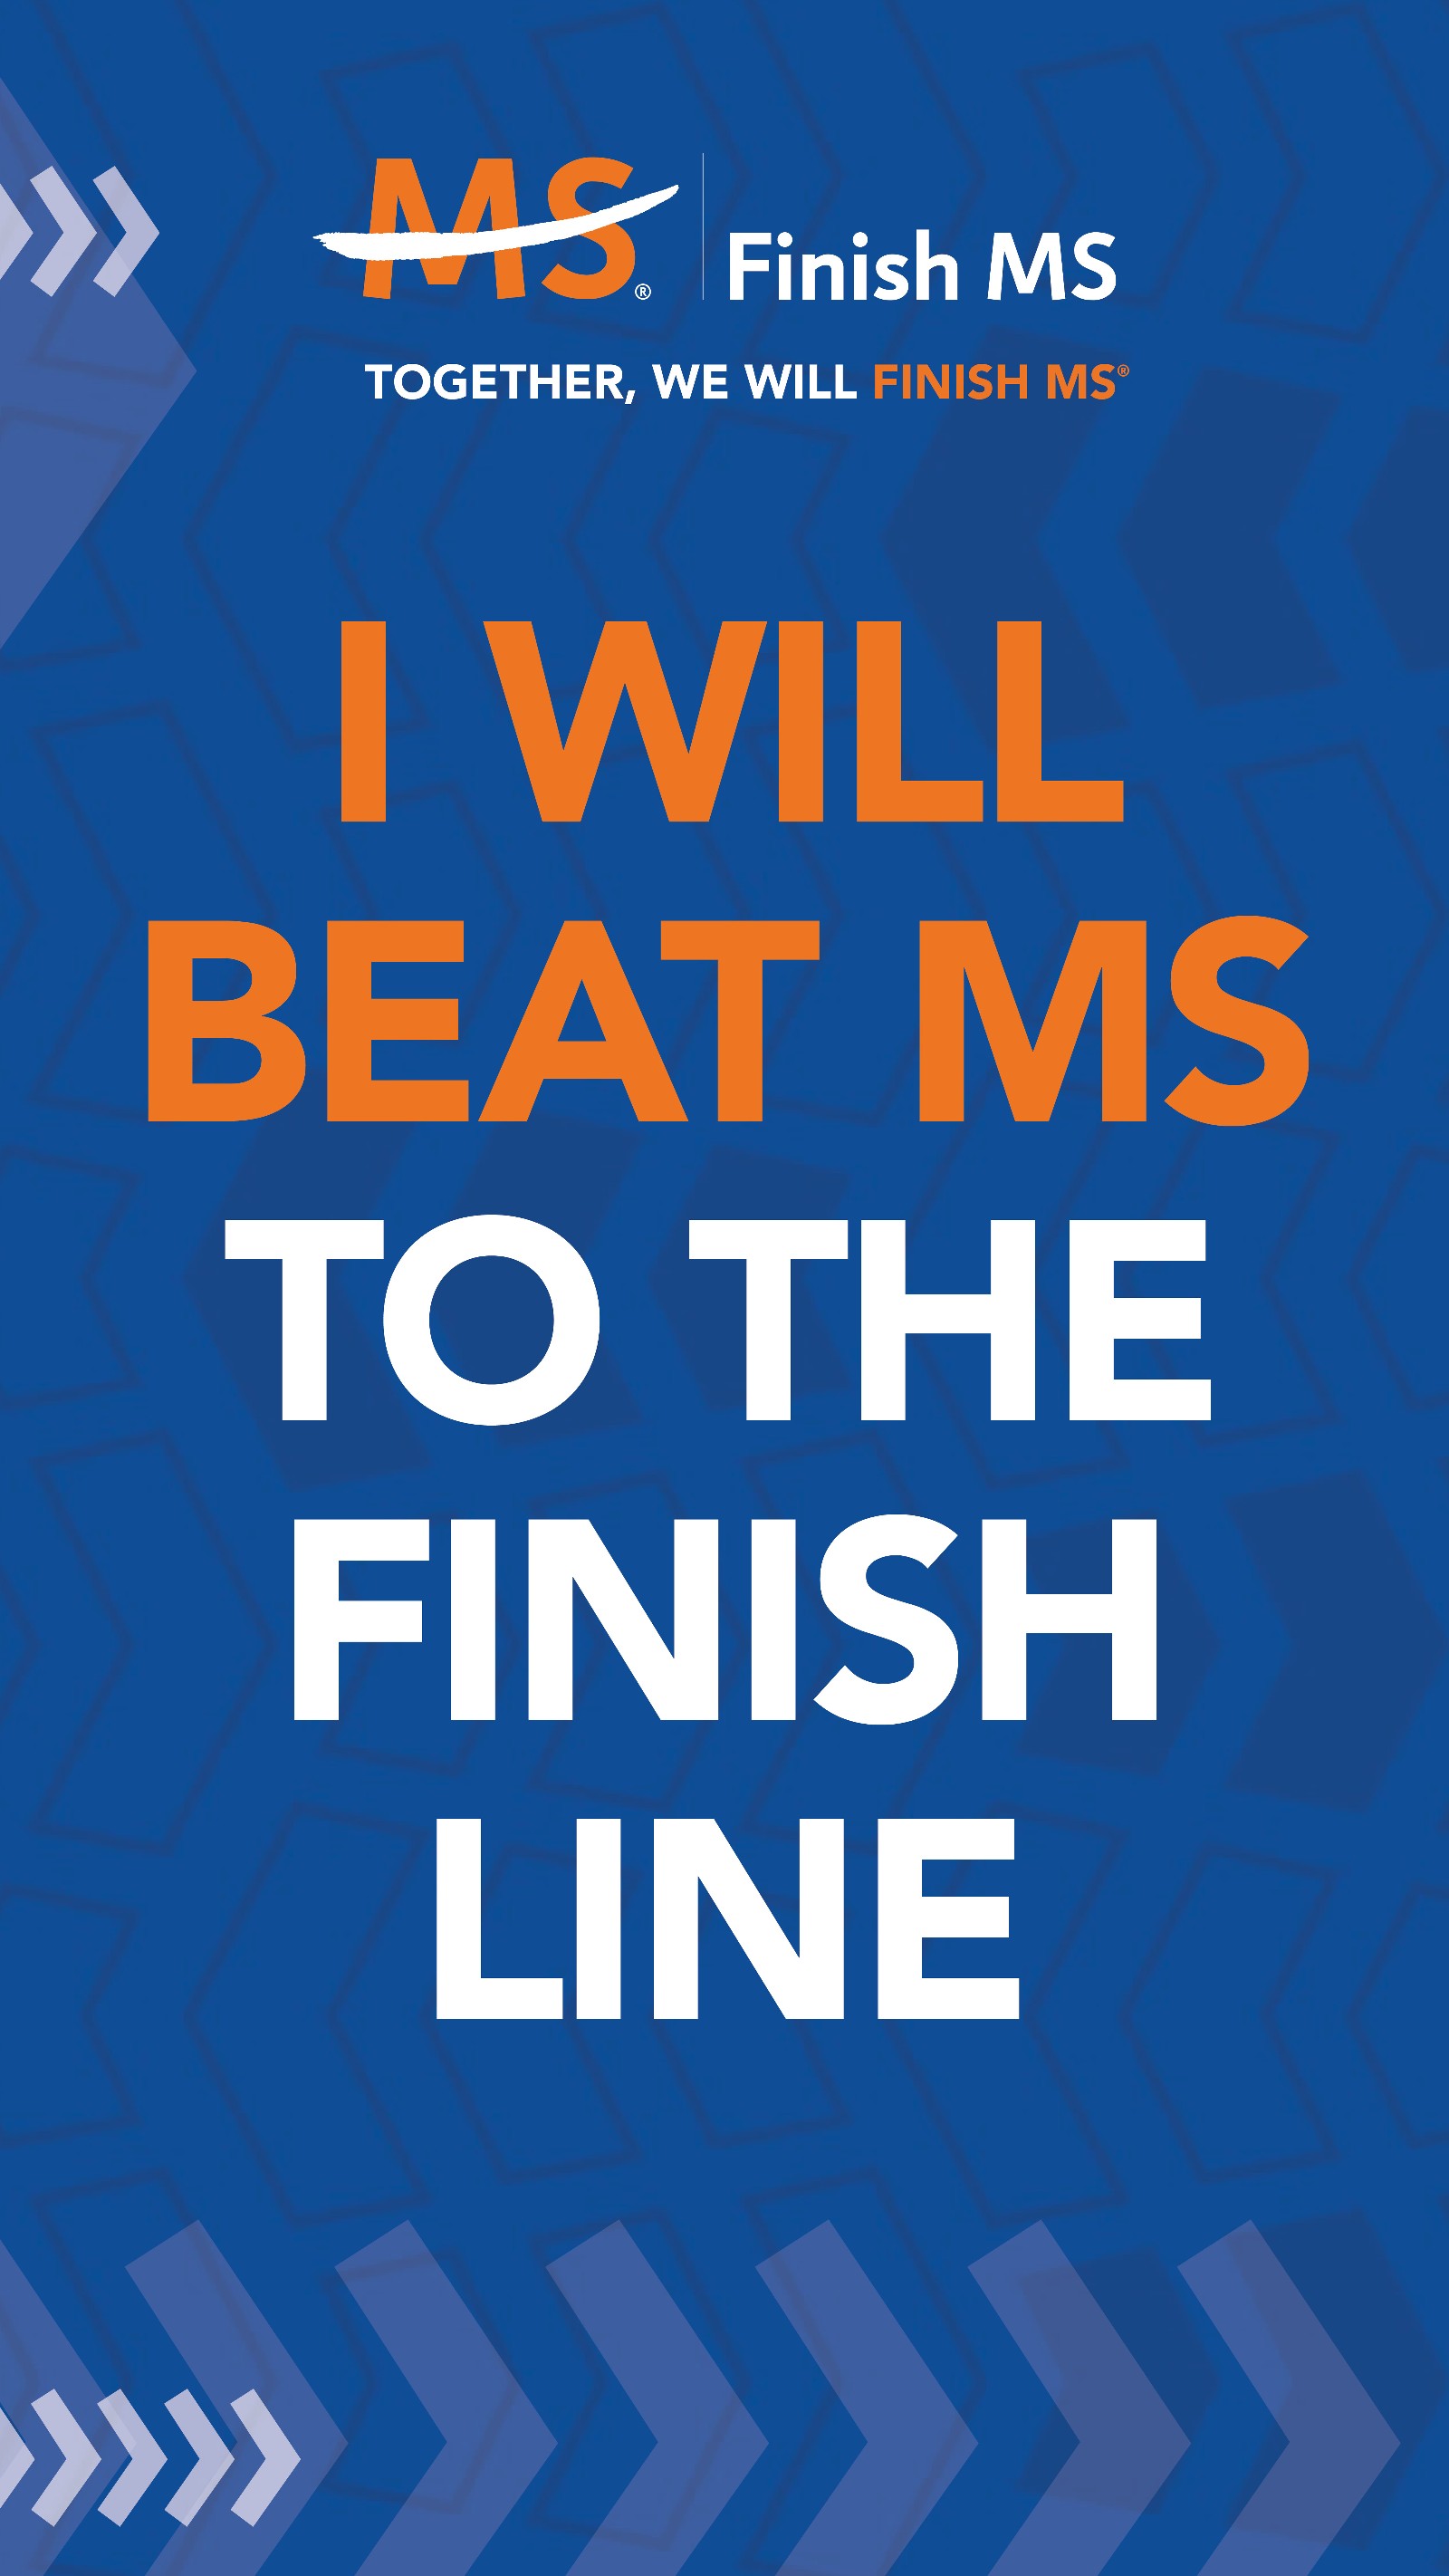 Finish MS - I will beat MS to the finish line v3